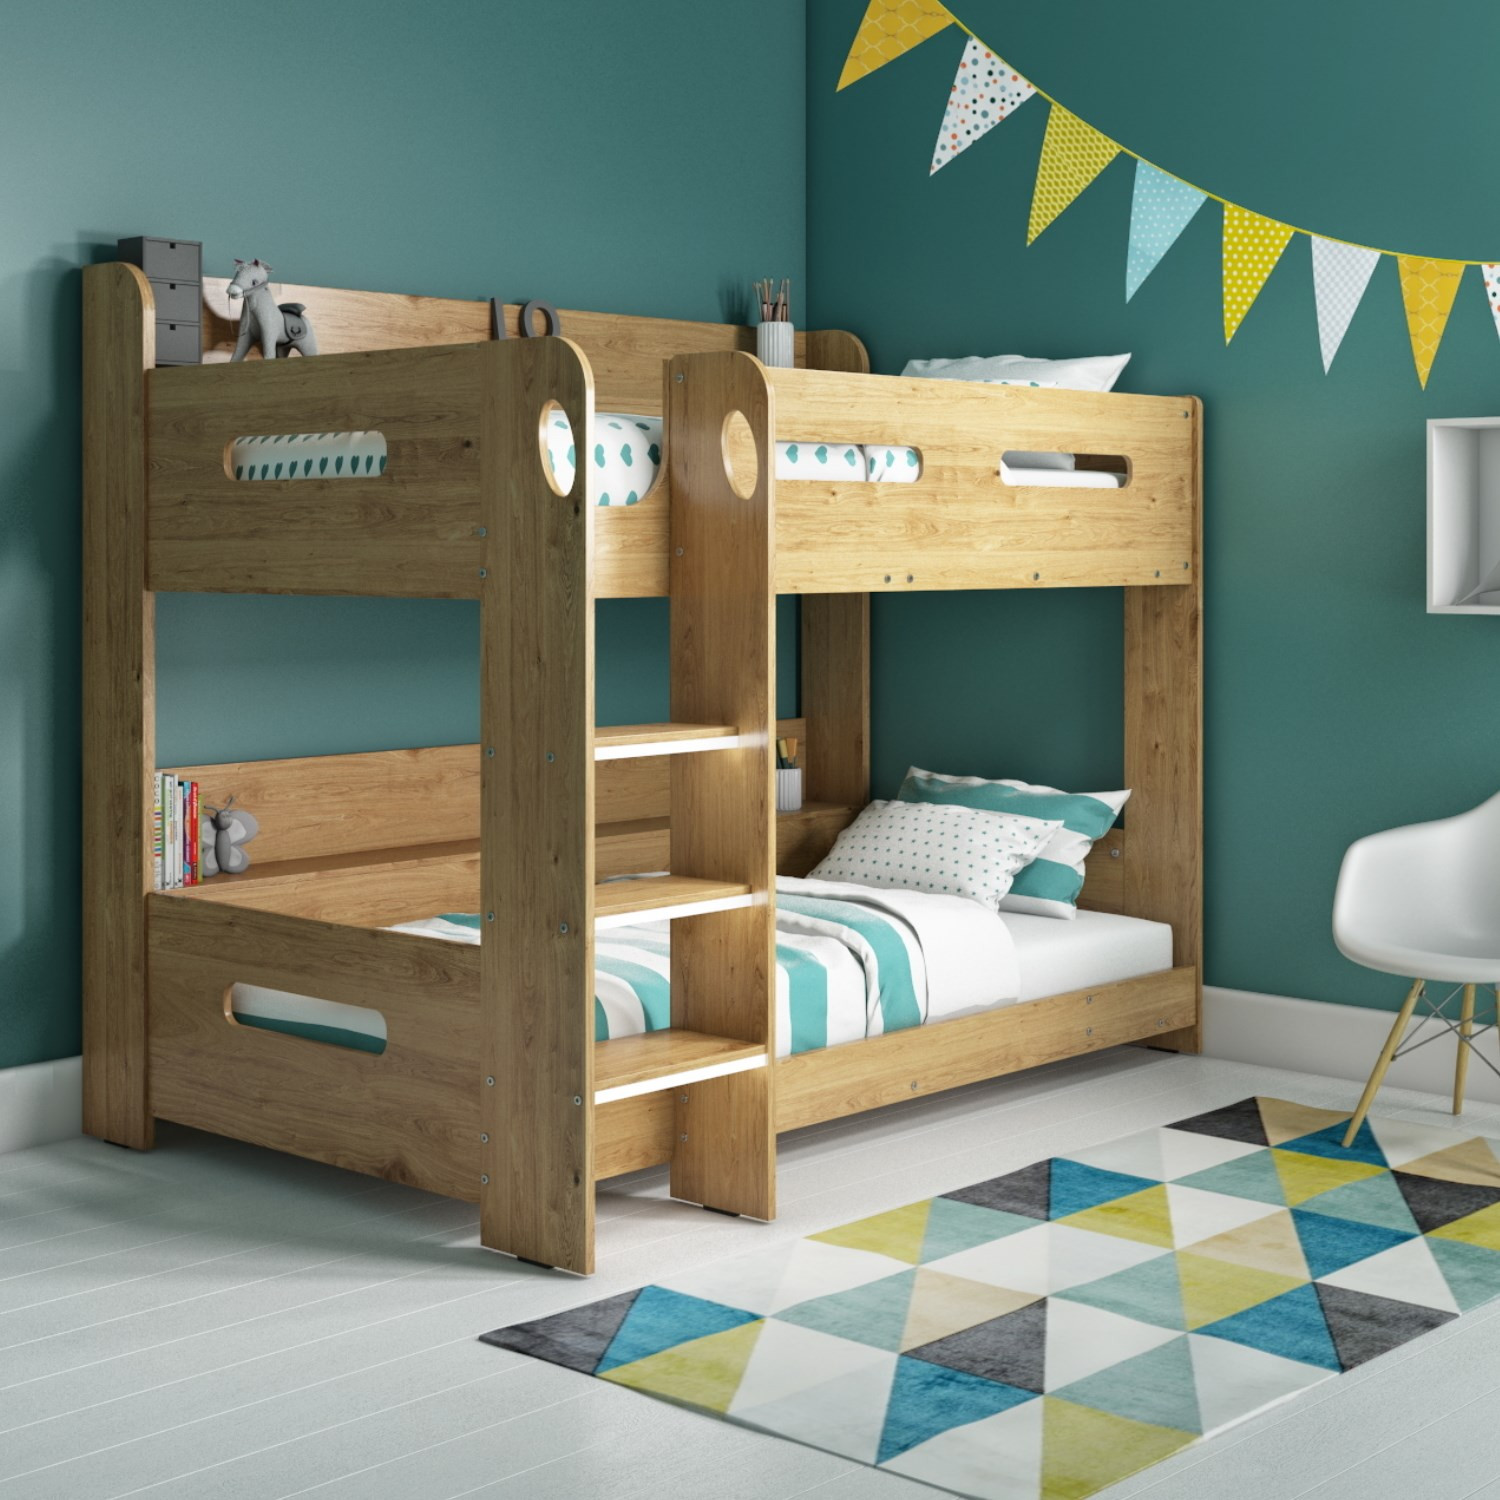 Childrens Loft Bed With Storage
 Modern Kids Oak Bunk Bed Storage Shelves